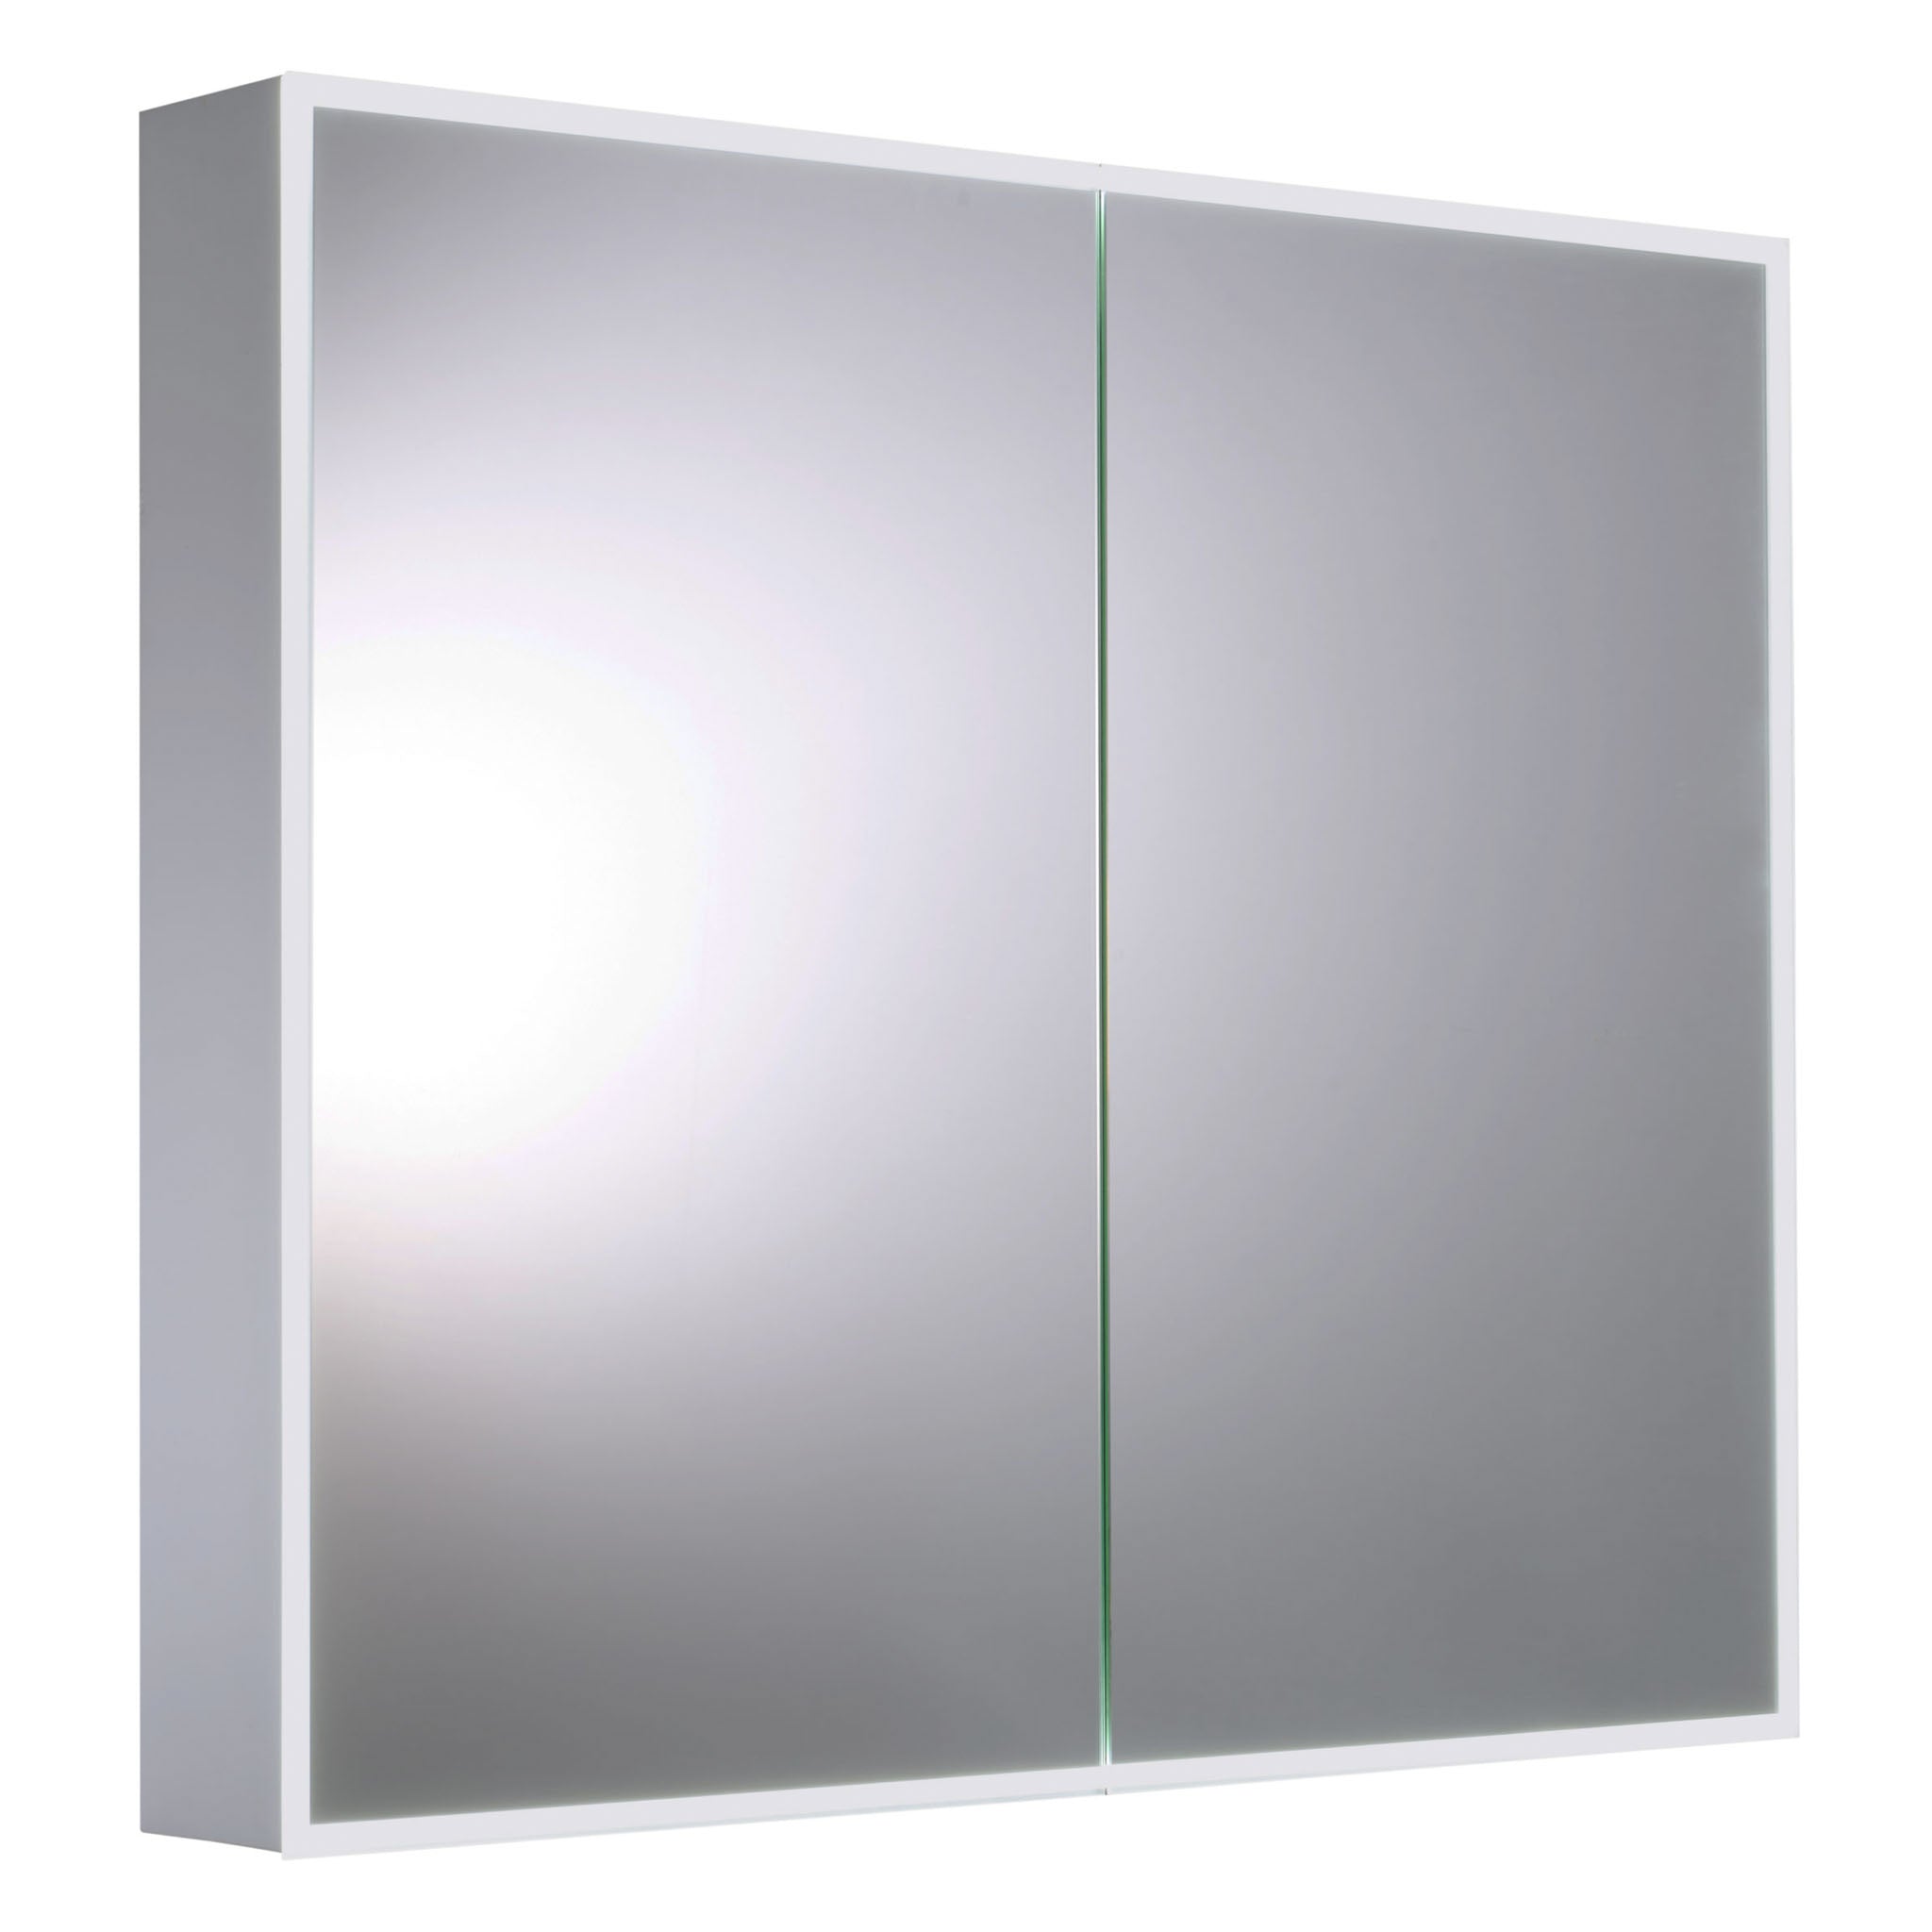 JTP Aspect 820 LED Double Mirror Cabinet 820 x 700mm